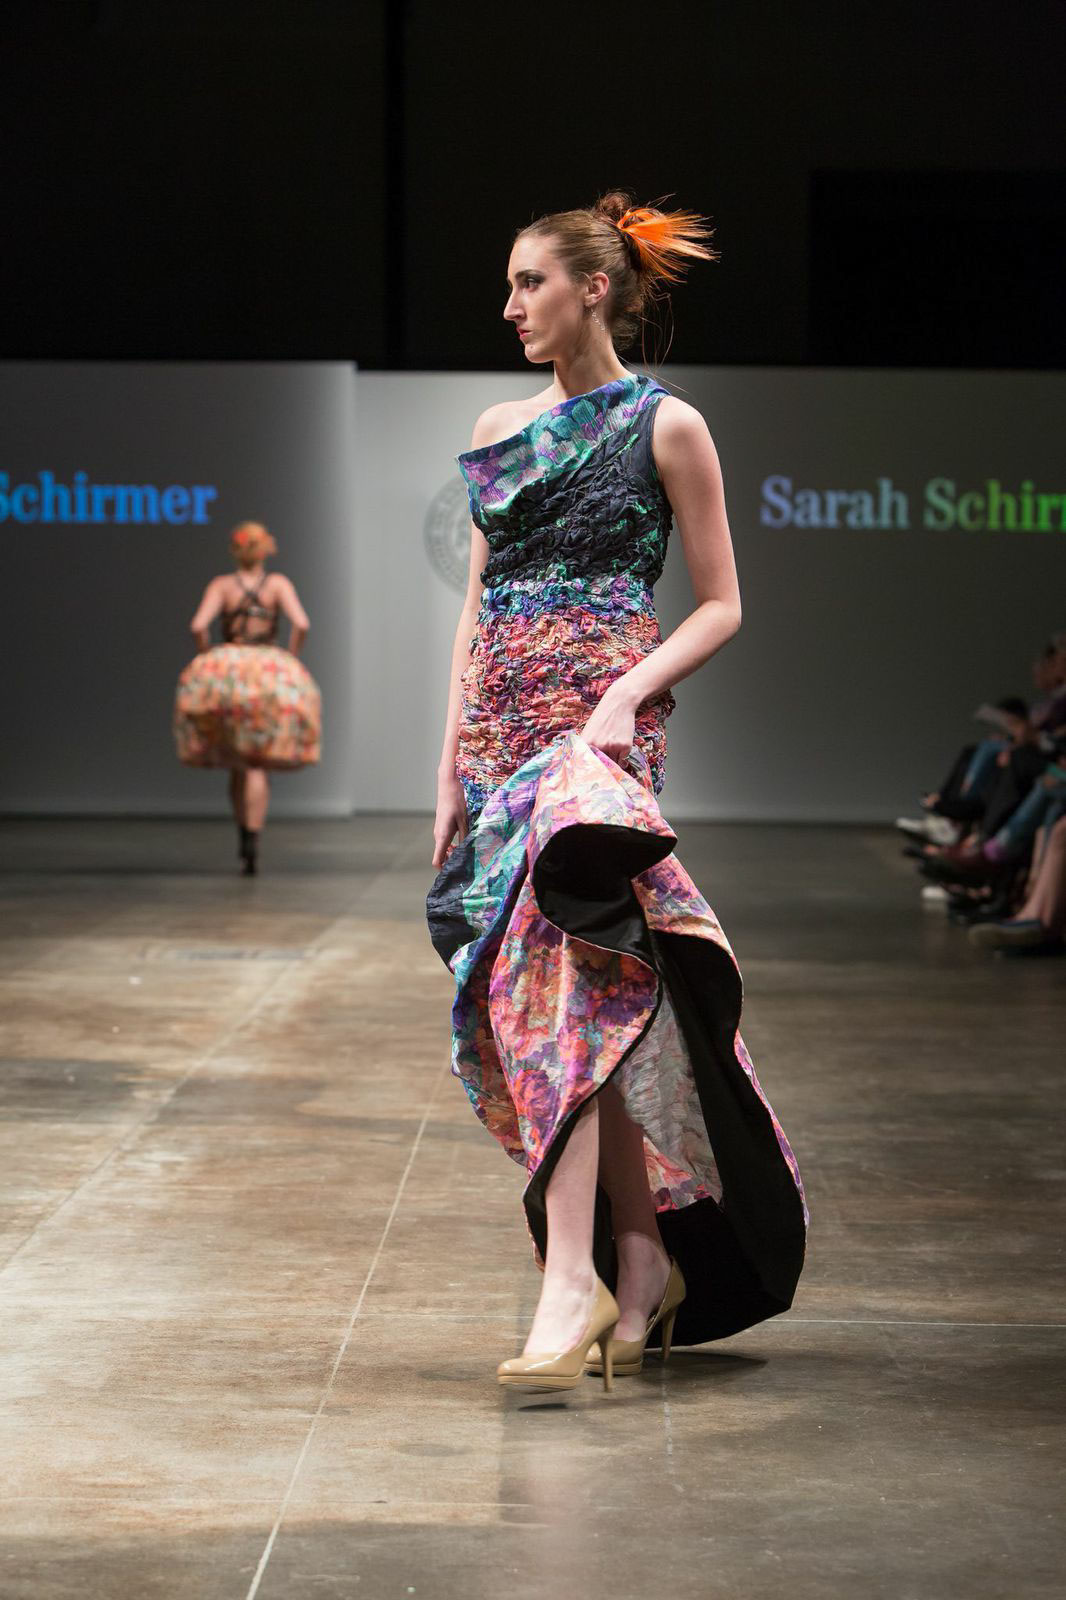 fashion design design Nicole Miller apparel garment dress art